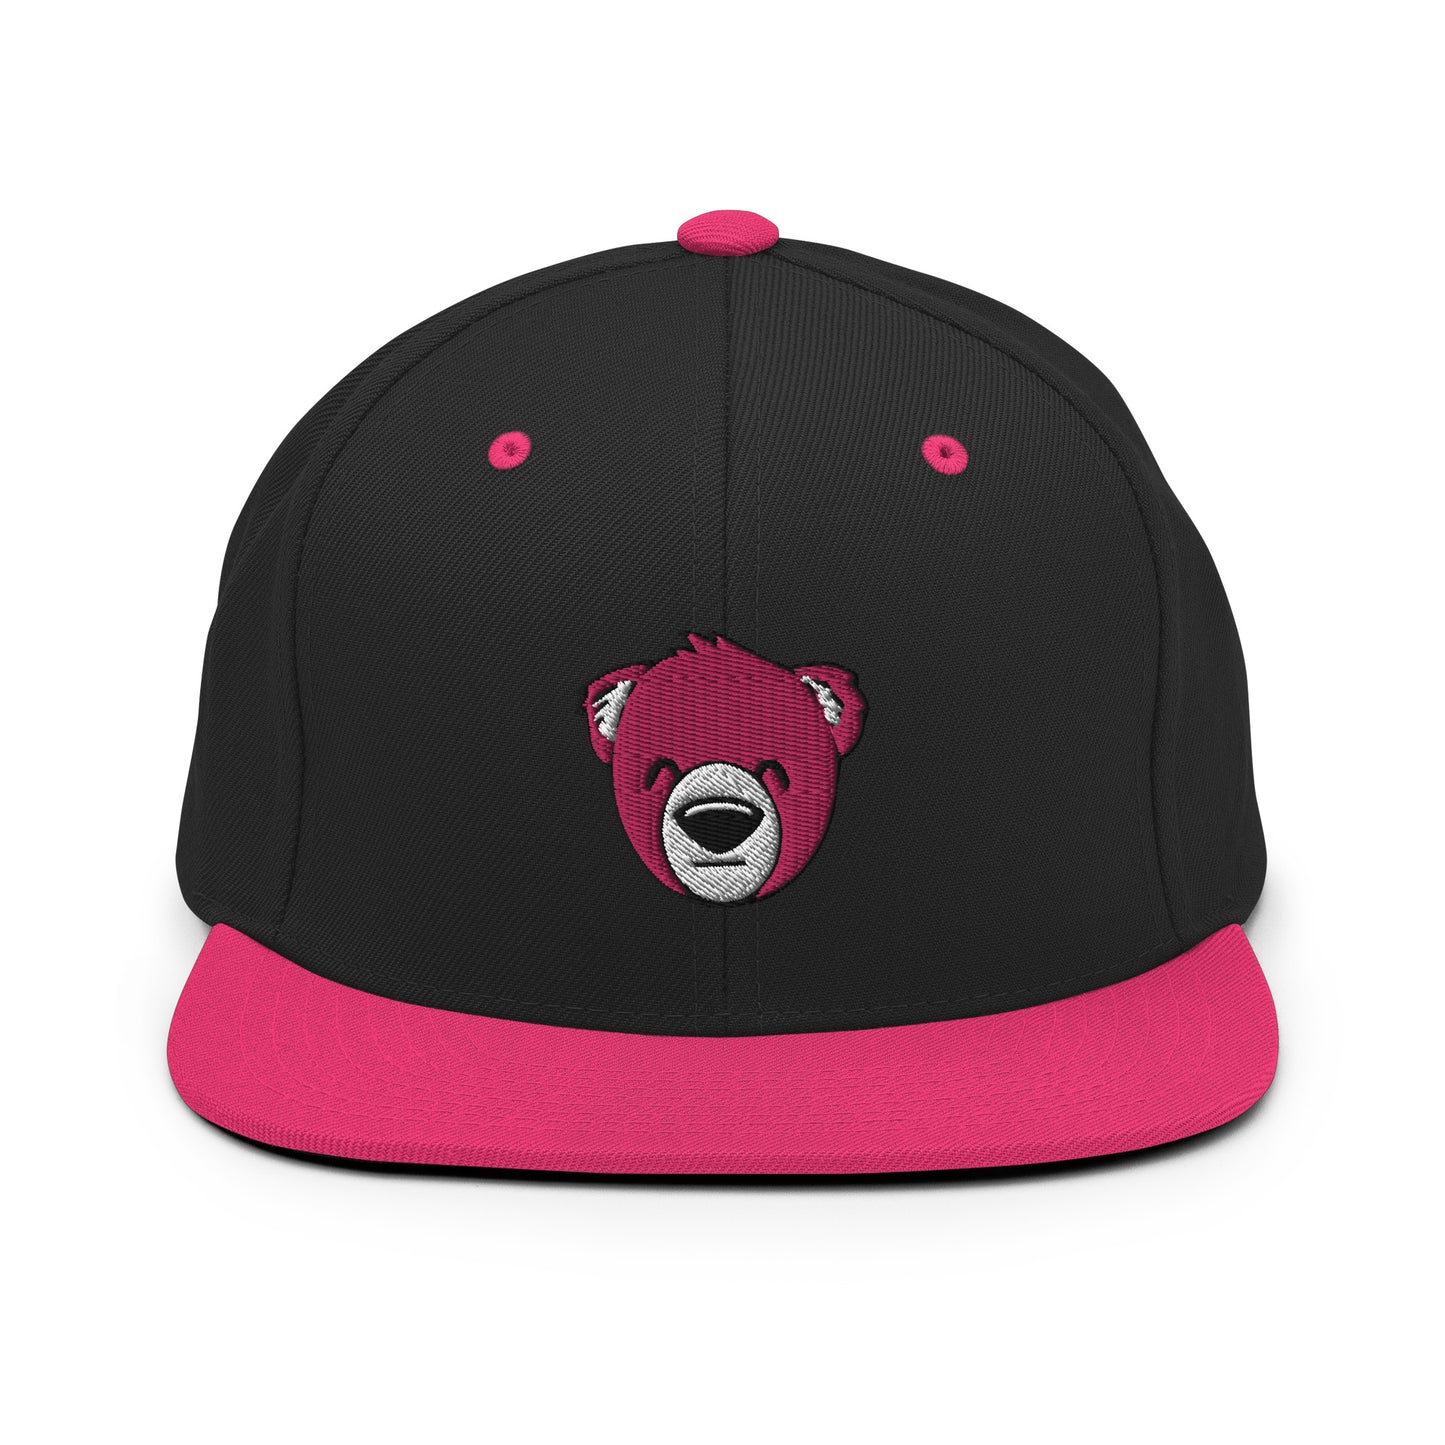 WeBearish Acceptance - Snapback Hat (Black/Pink)